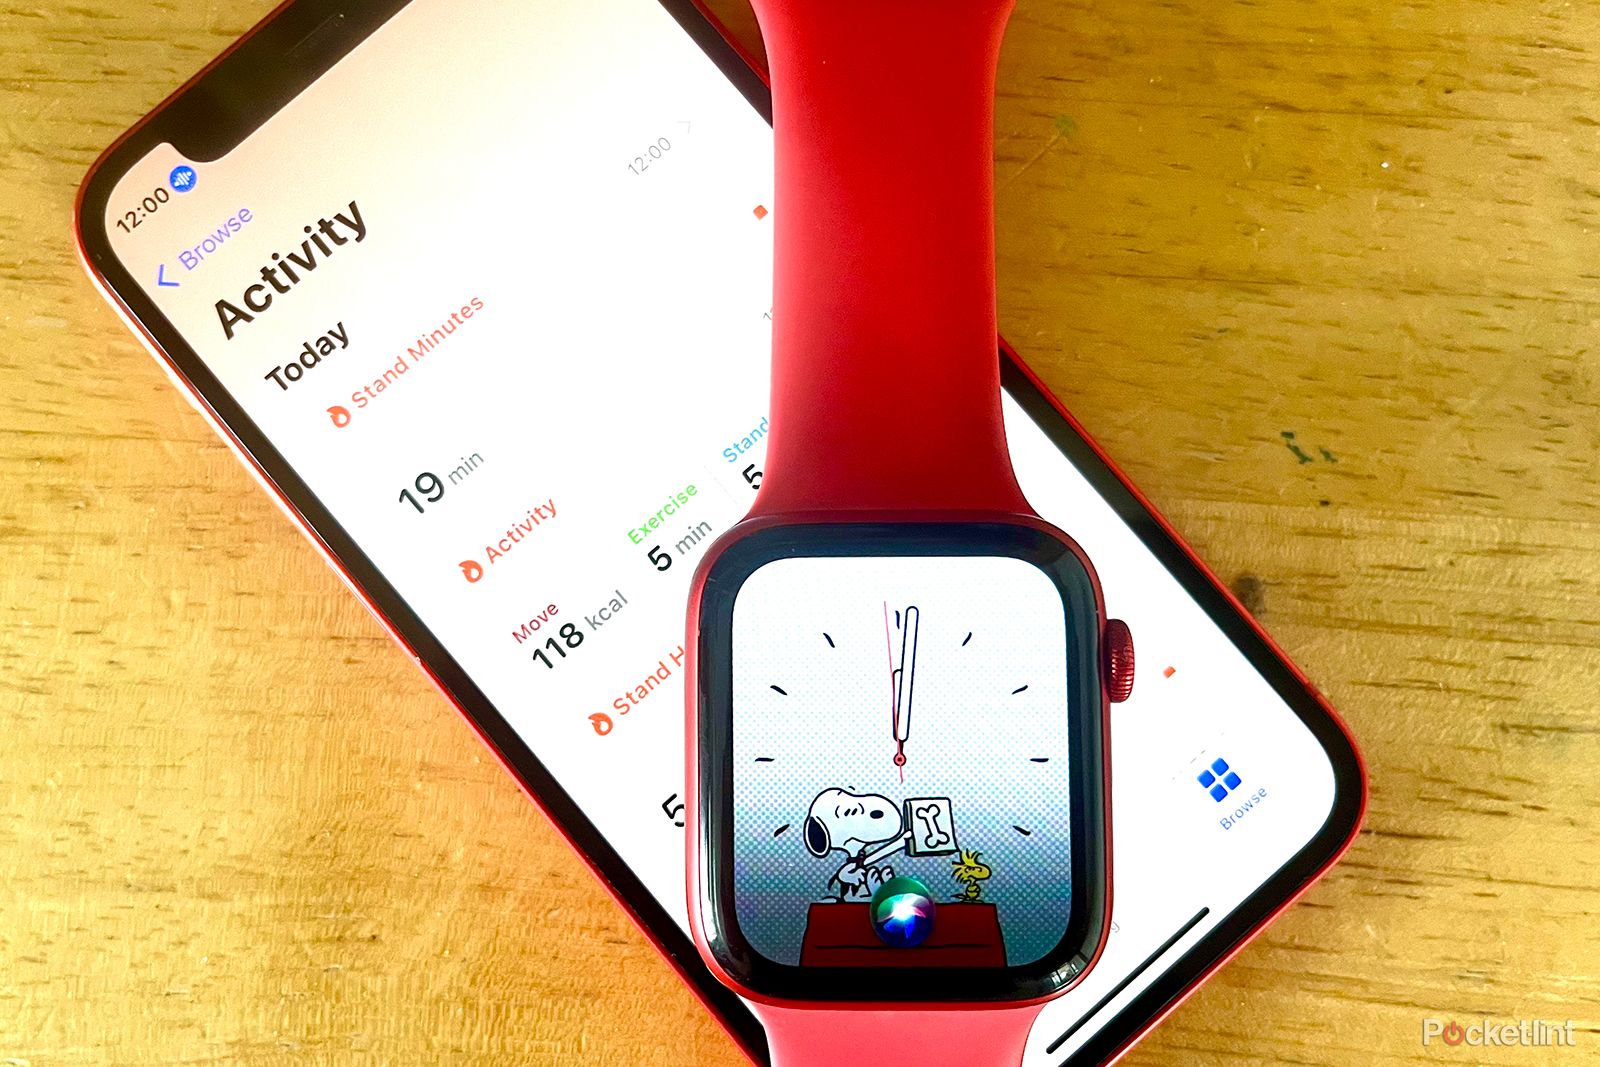 Siri on Apple Watch Health app on iPhone